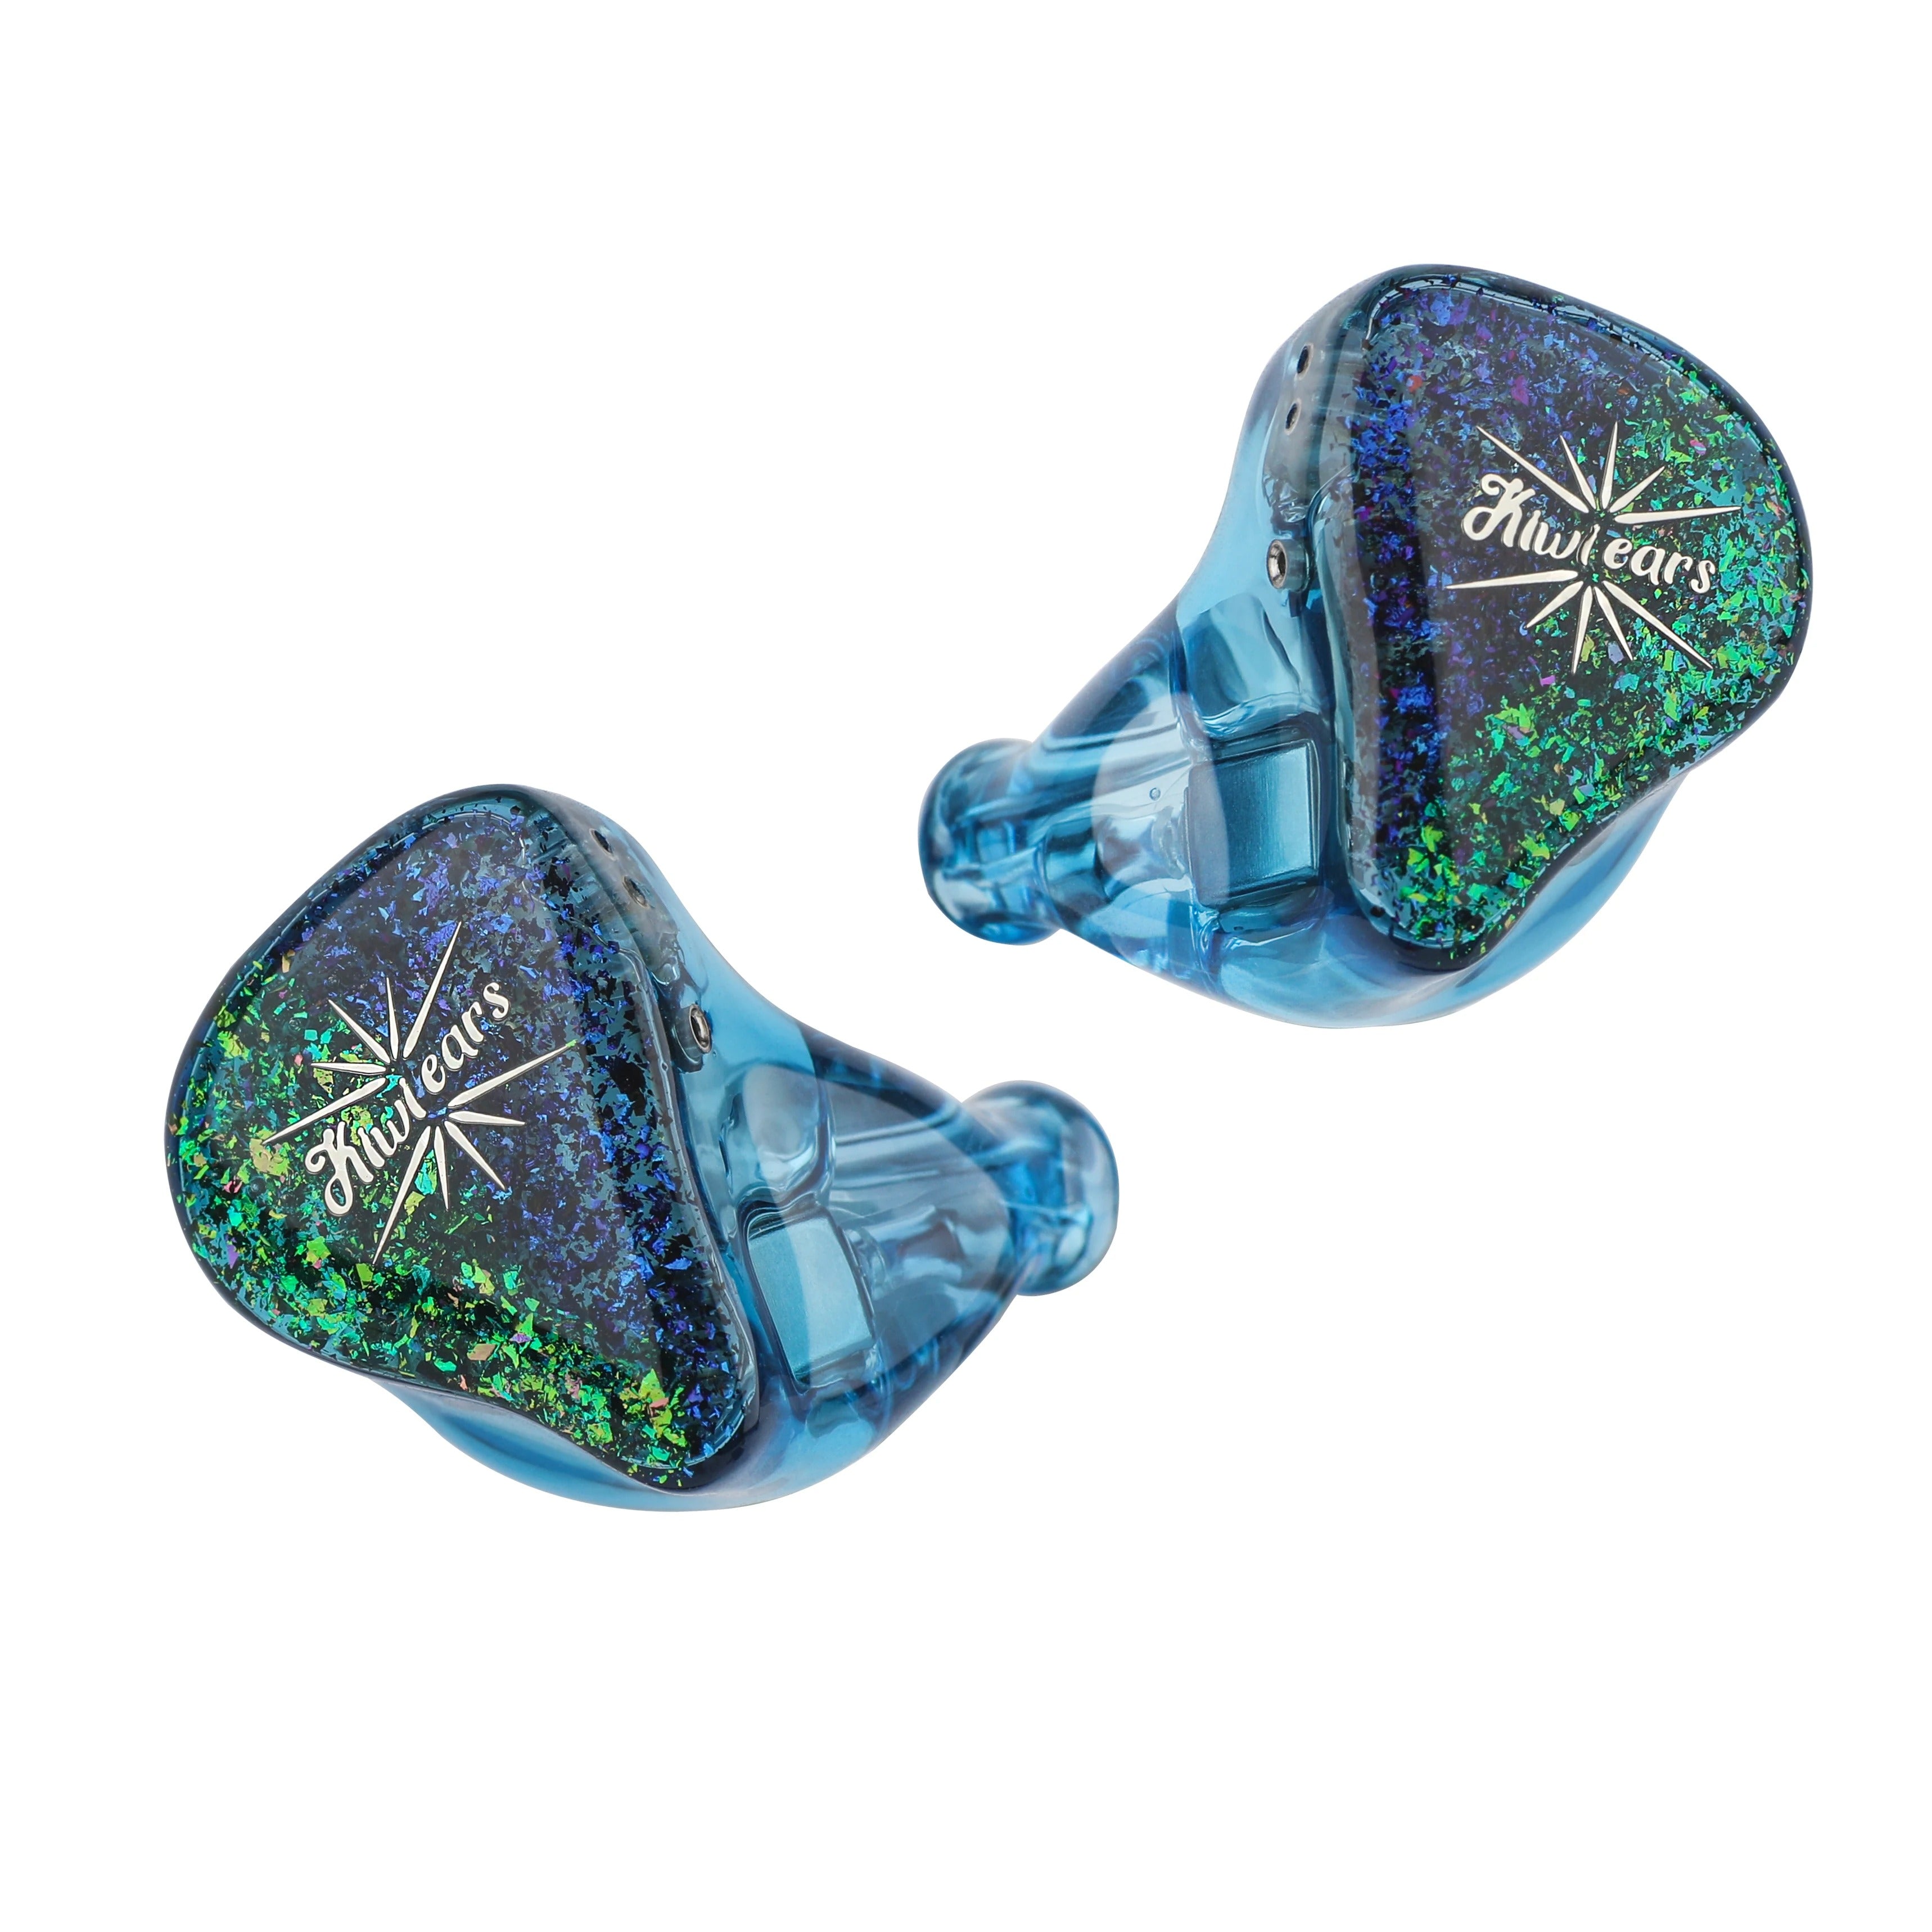 Kiwi Ears Forteza Triple Driver IEM